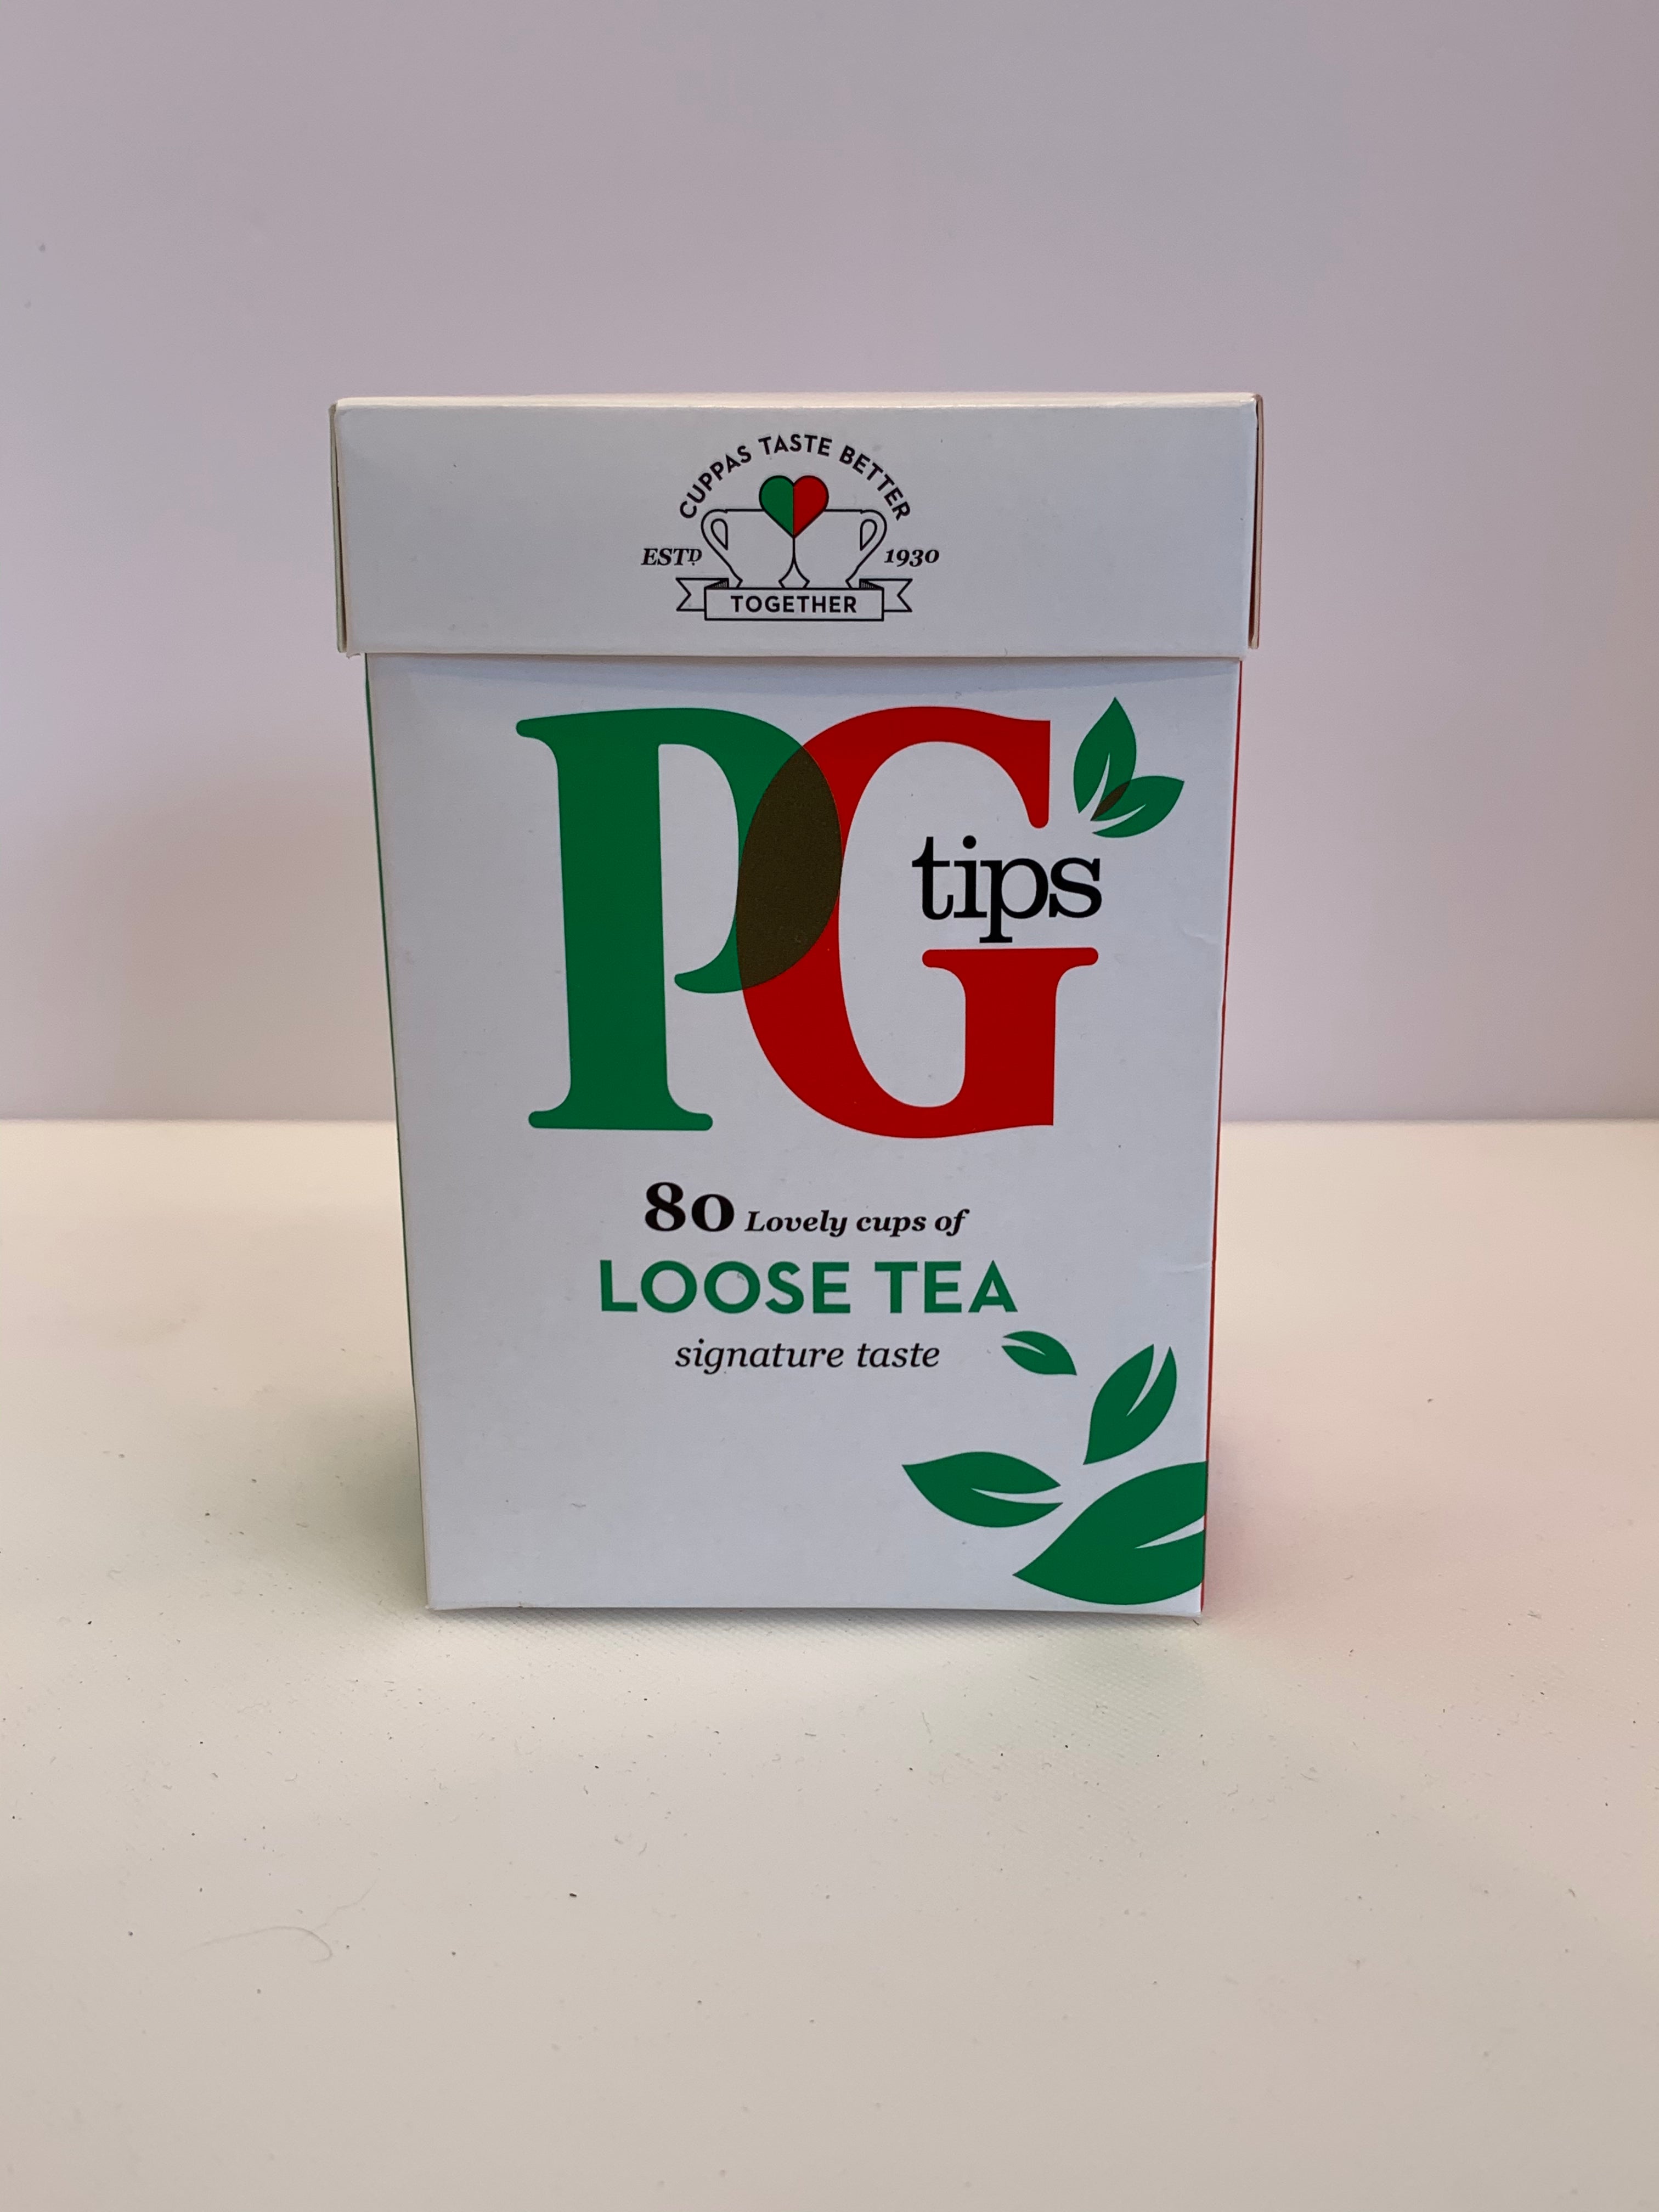  PG Tips Loose Tea